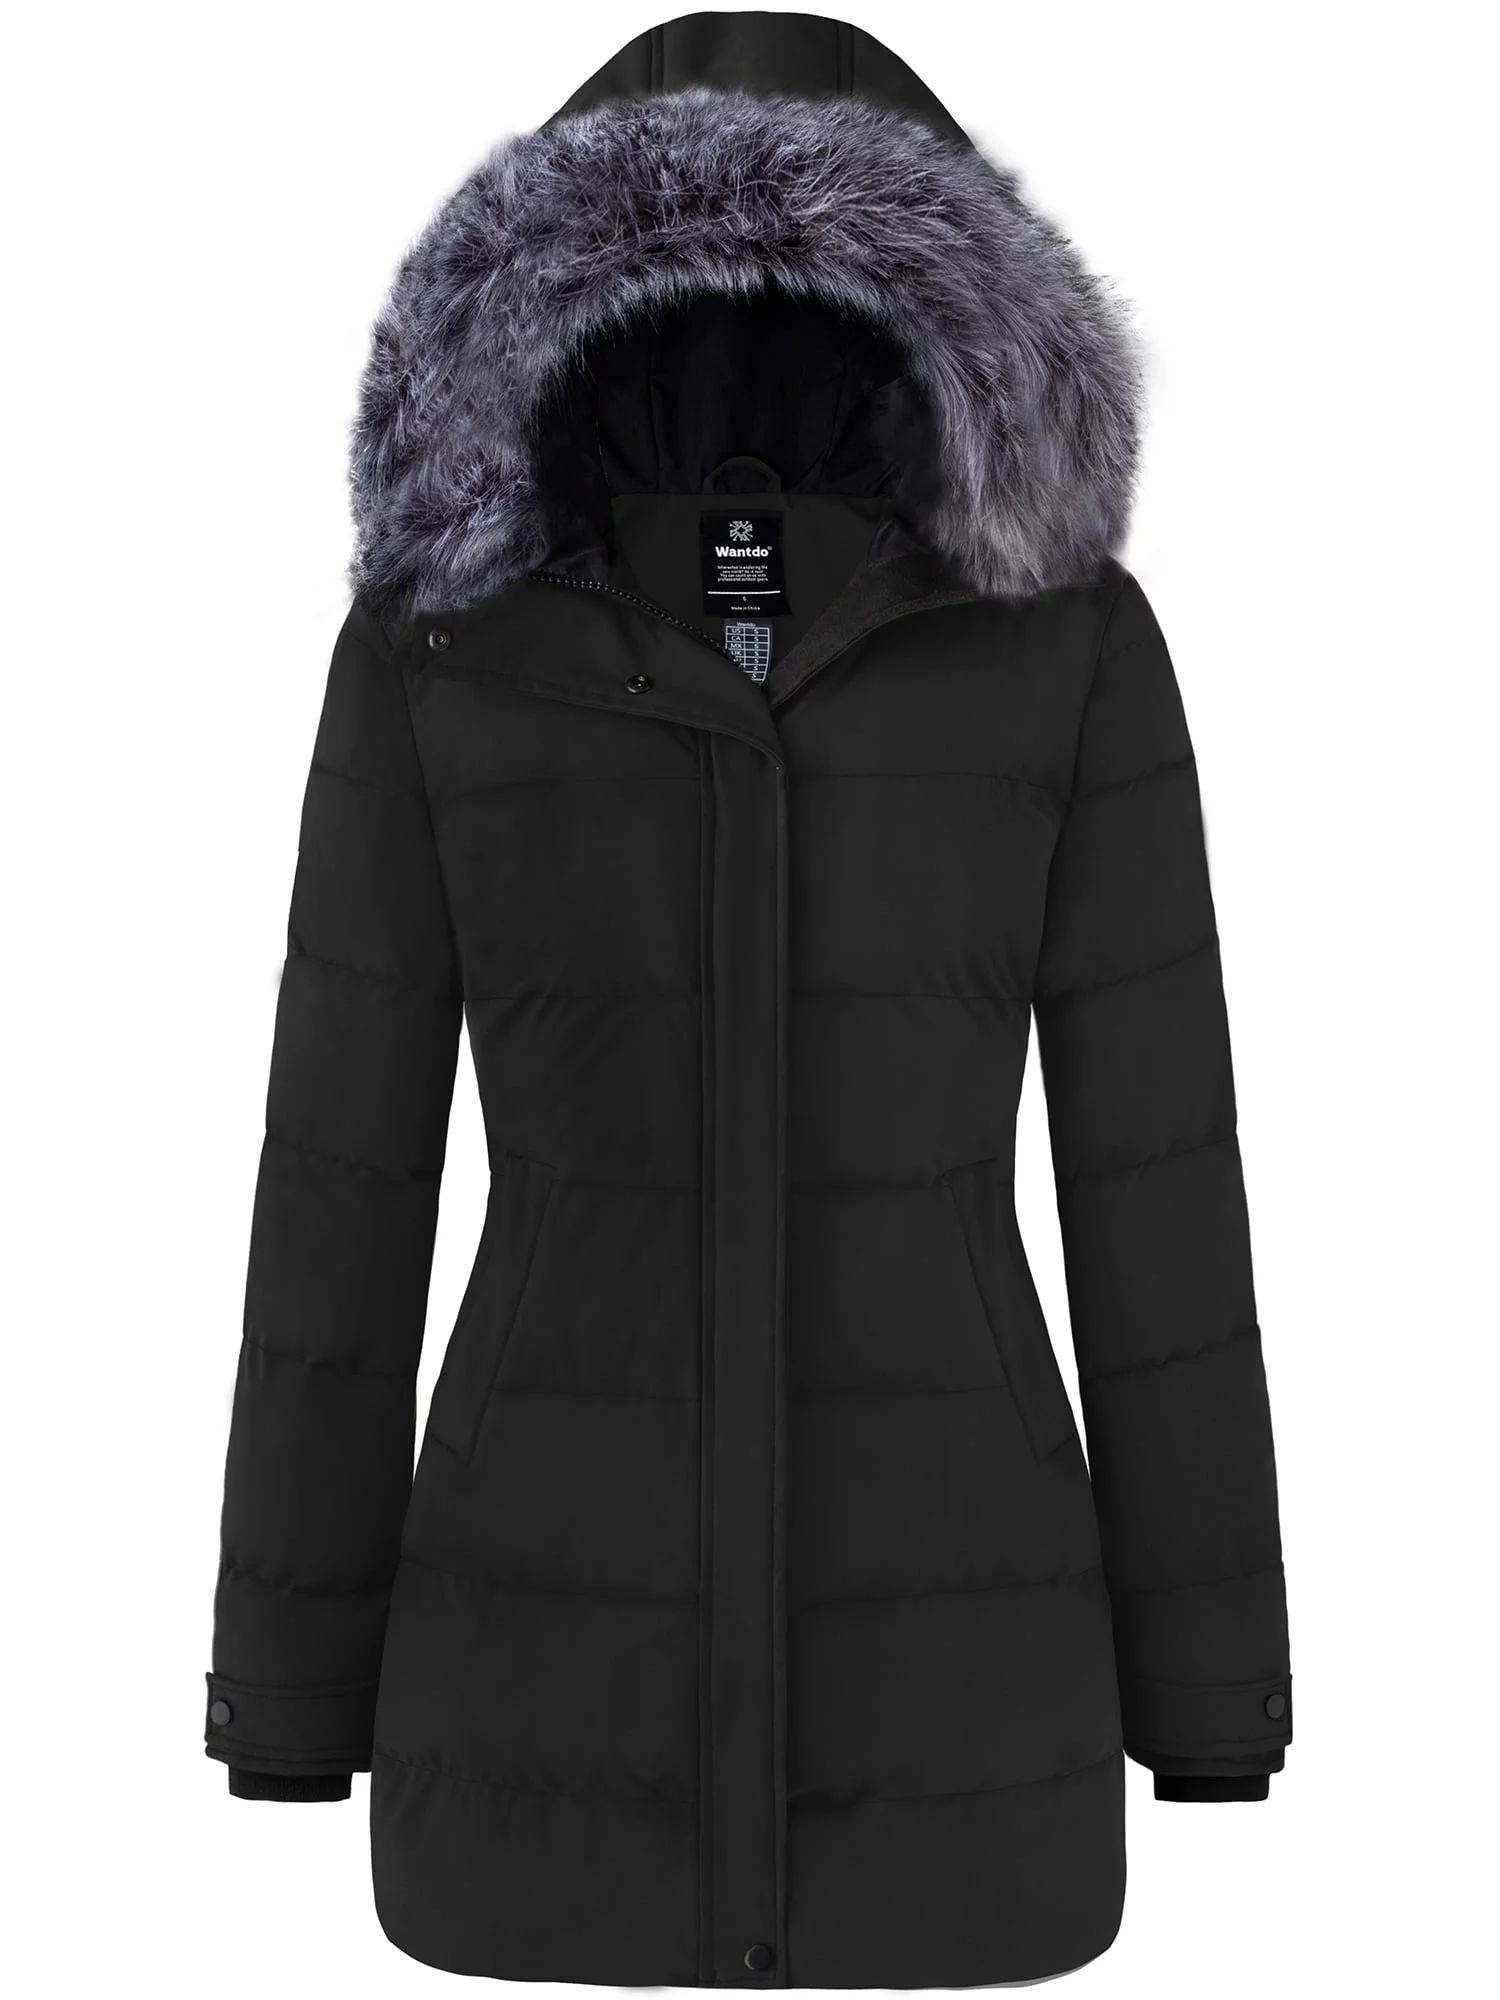 Wantdo Women's Winter Jacket Warm Puffer Coat Insulated Winter Coat Black M | Walmart (US)